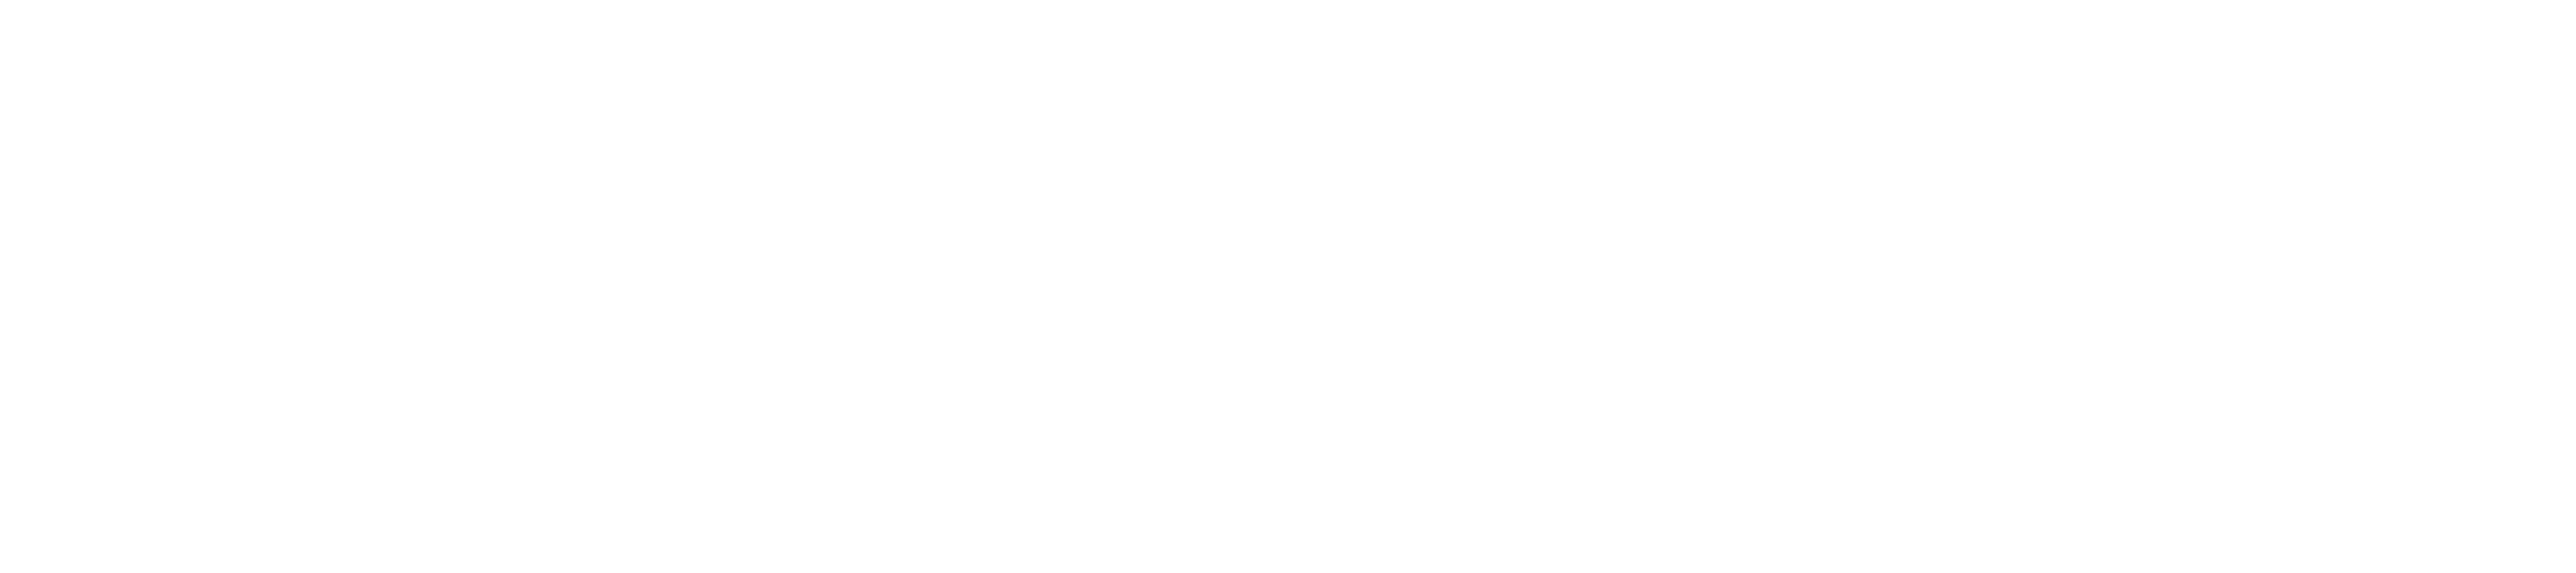 logo concours-advance espace candidat